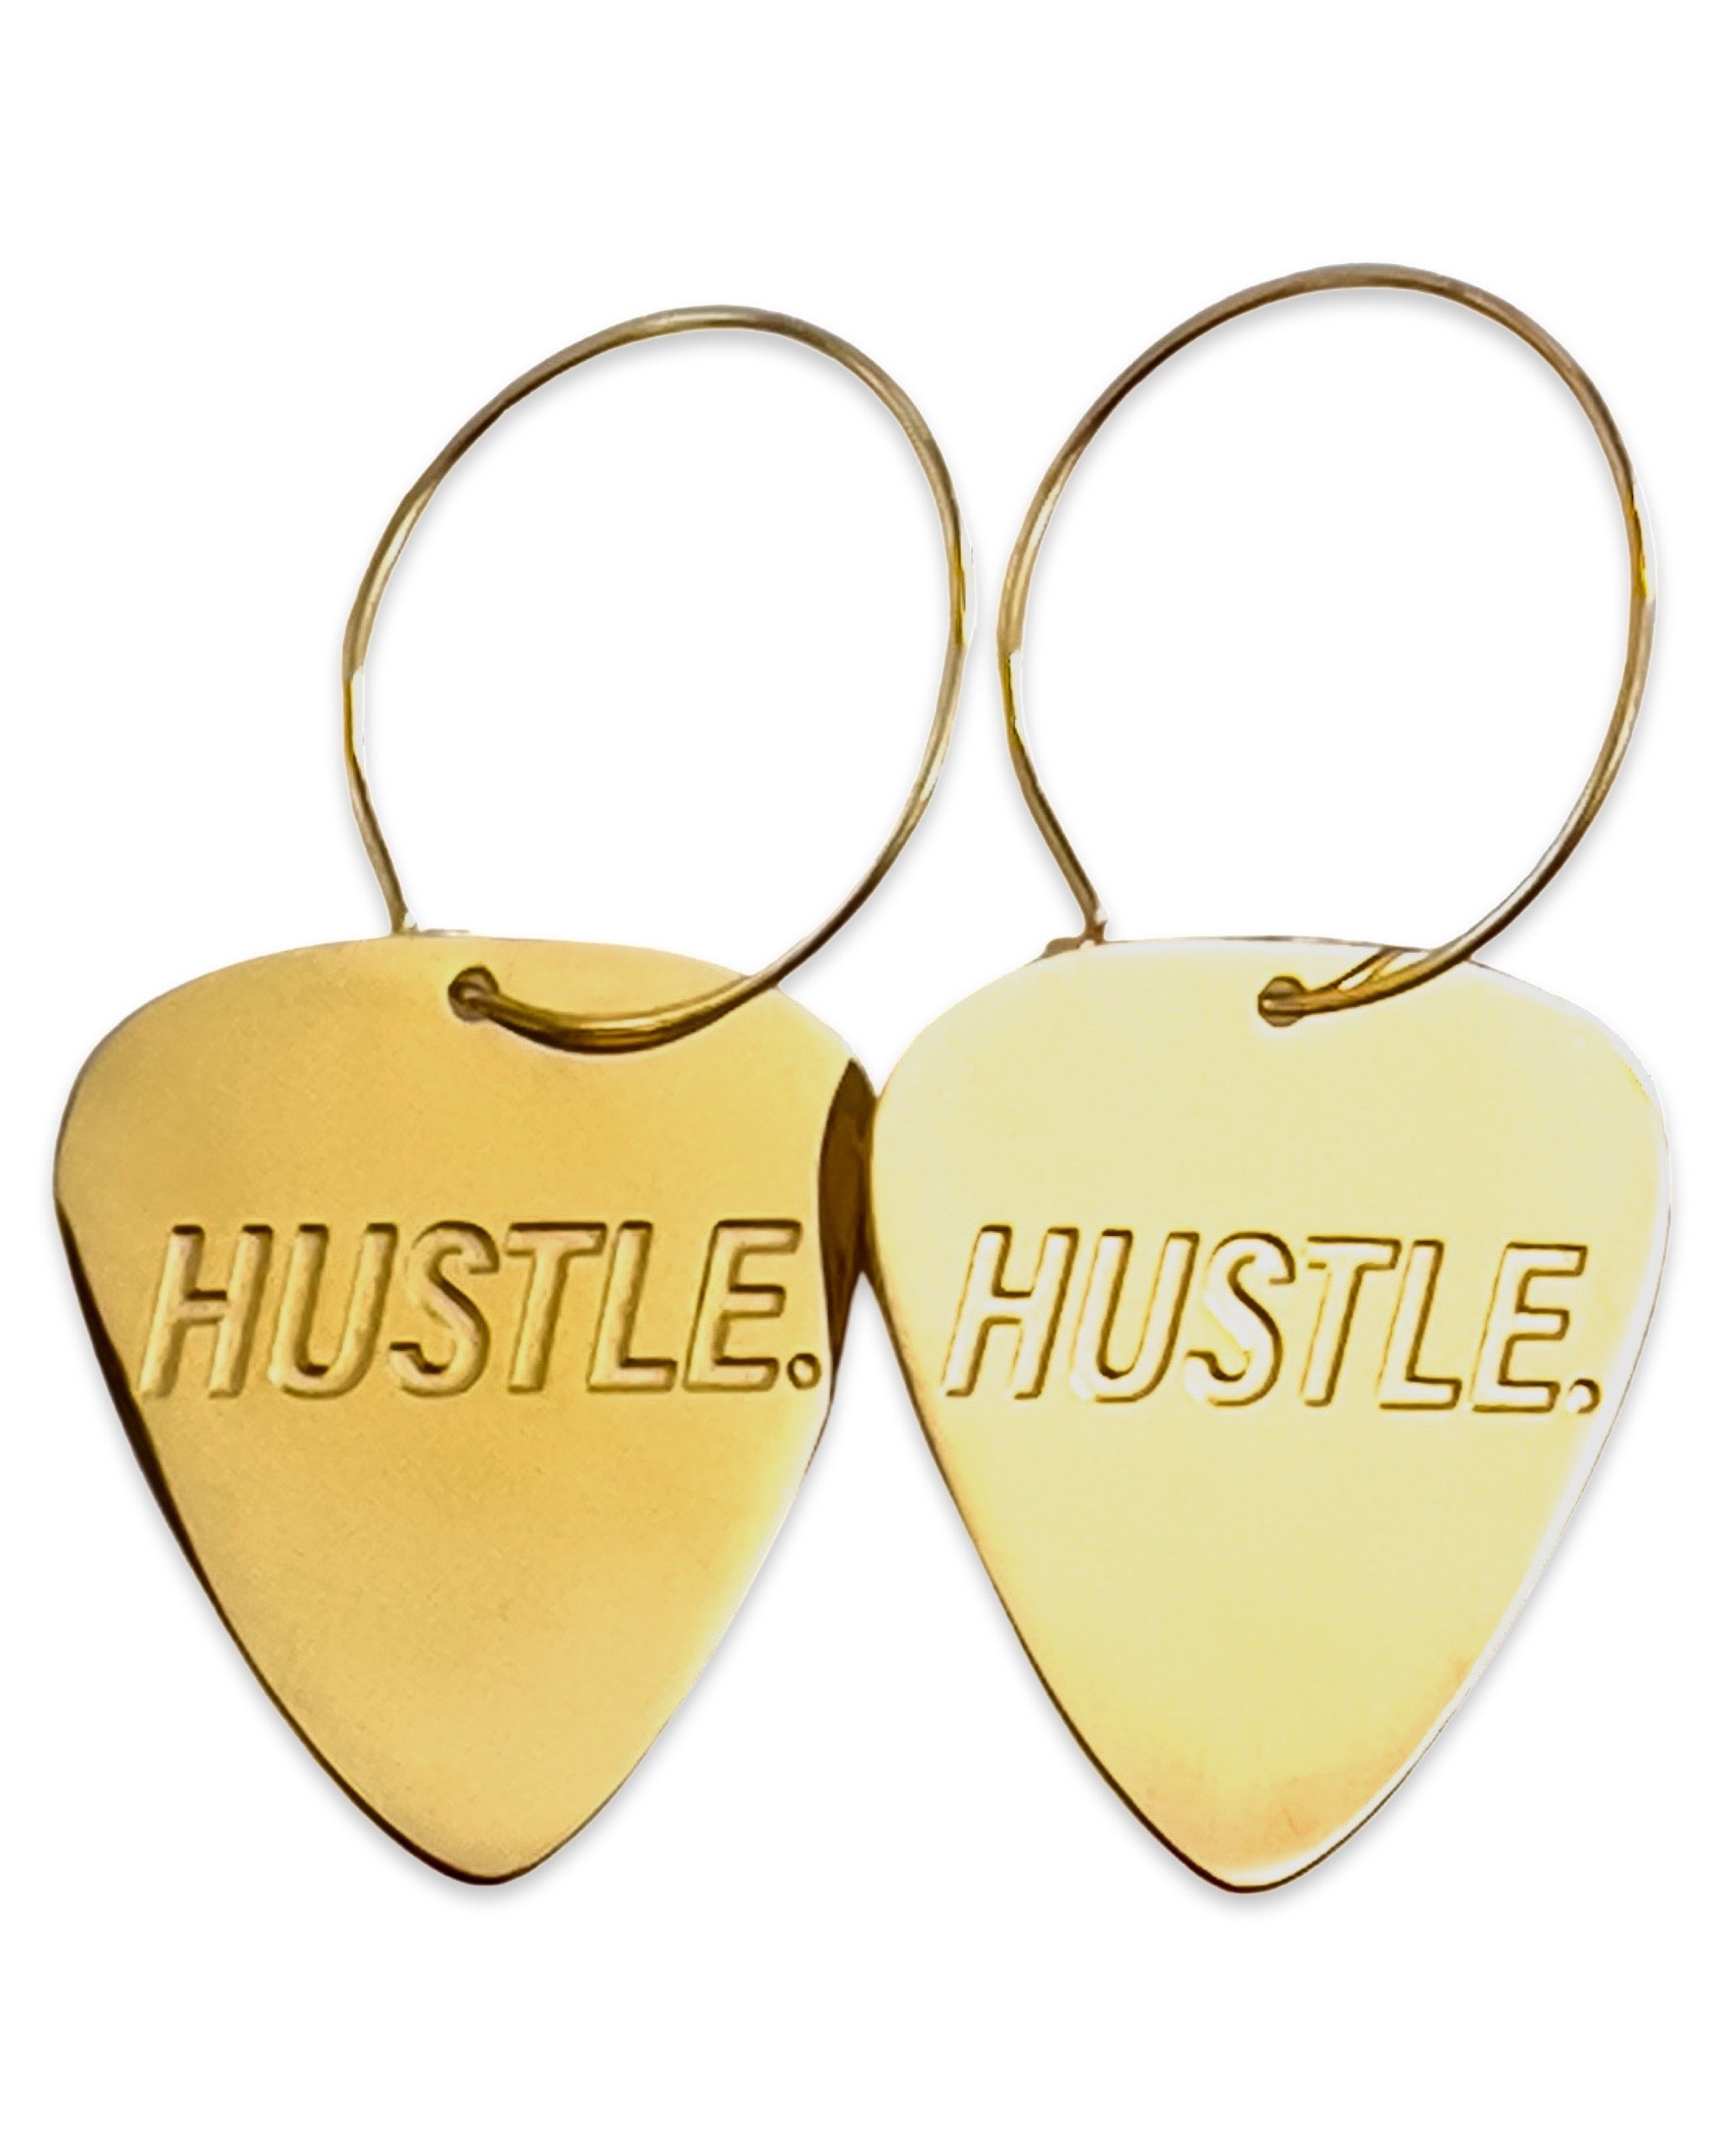 HUSTLE. Gold Reversible Single Guitar Pick Earrings